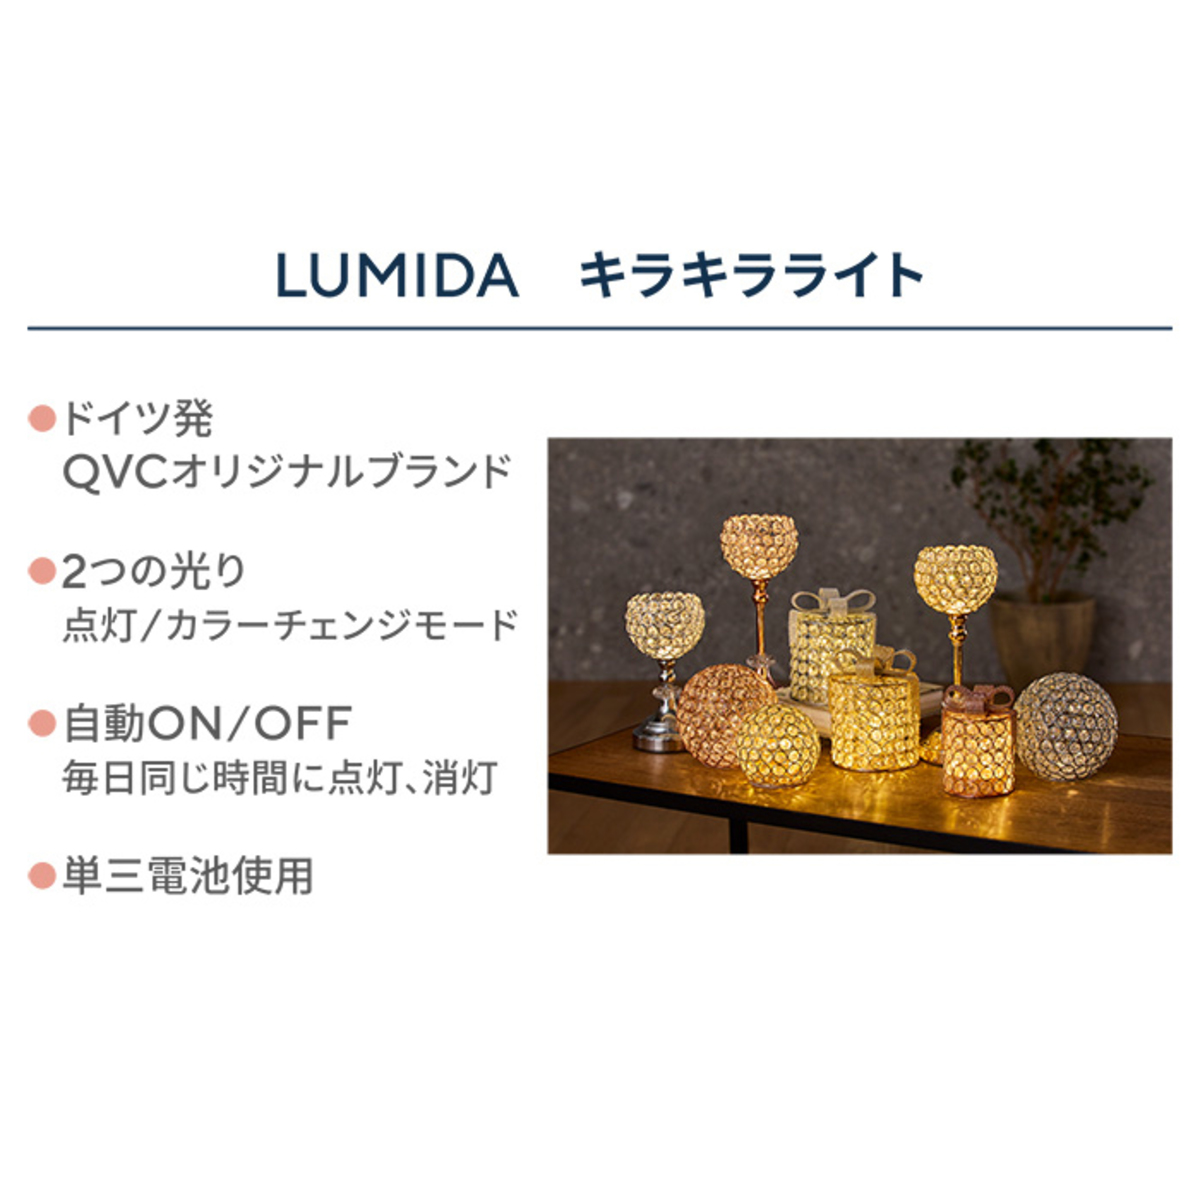 LUMIDA LEDキラキラ ギフトボックスミニ オンオフタイマー付 ルミーダ 